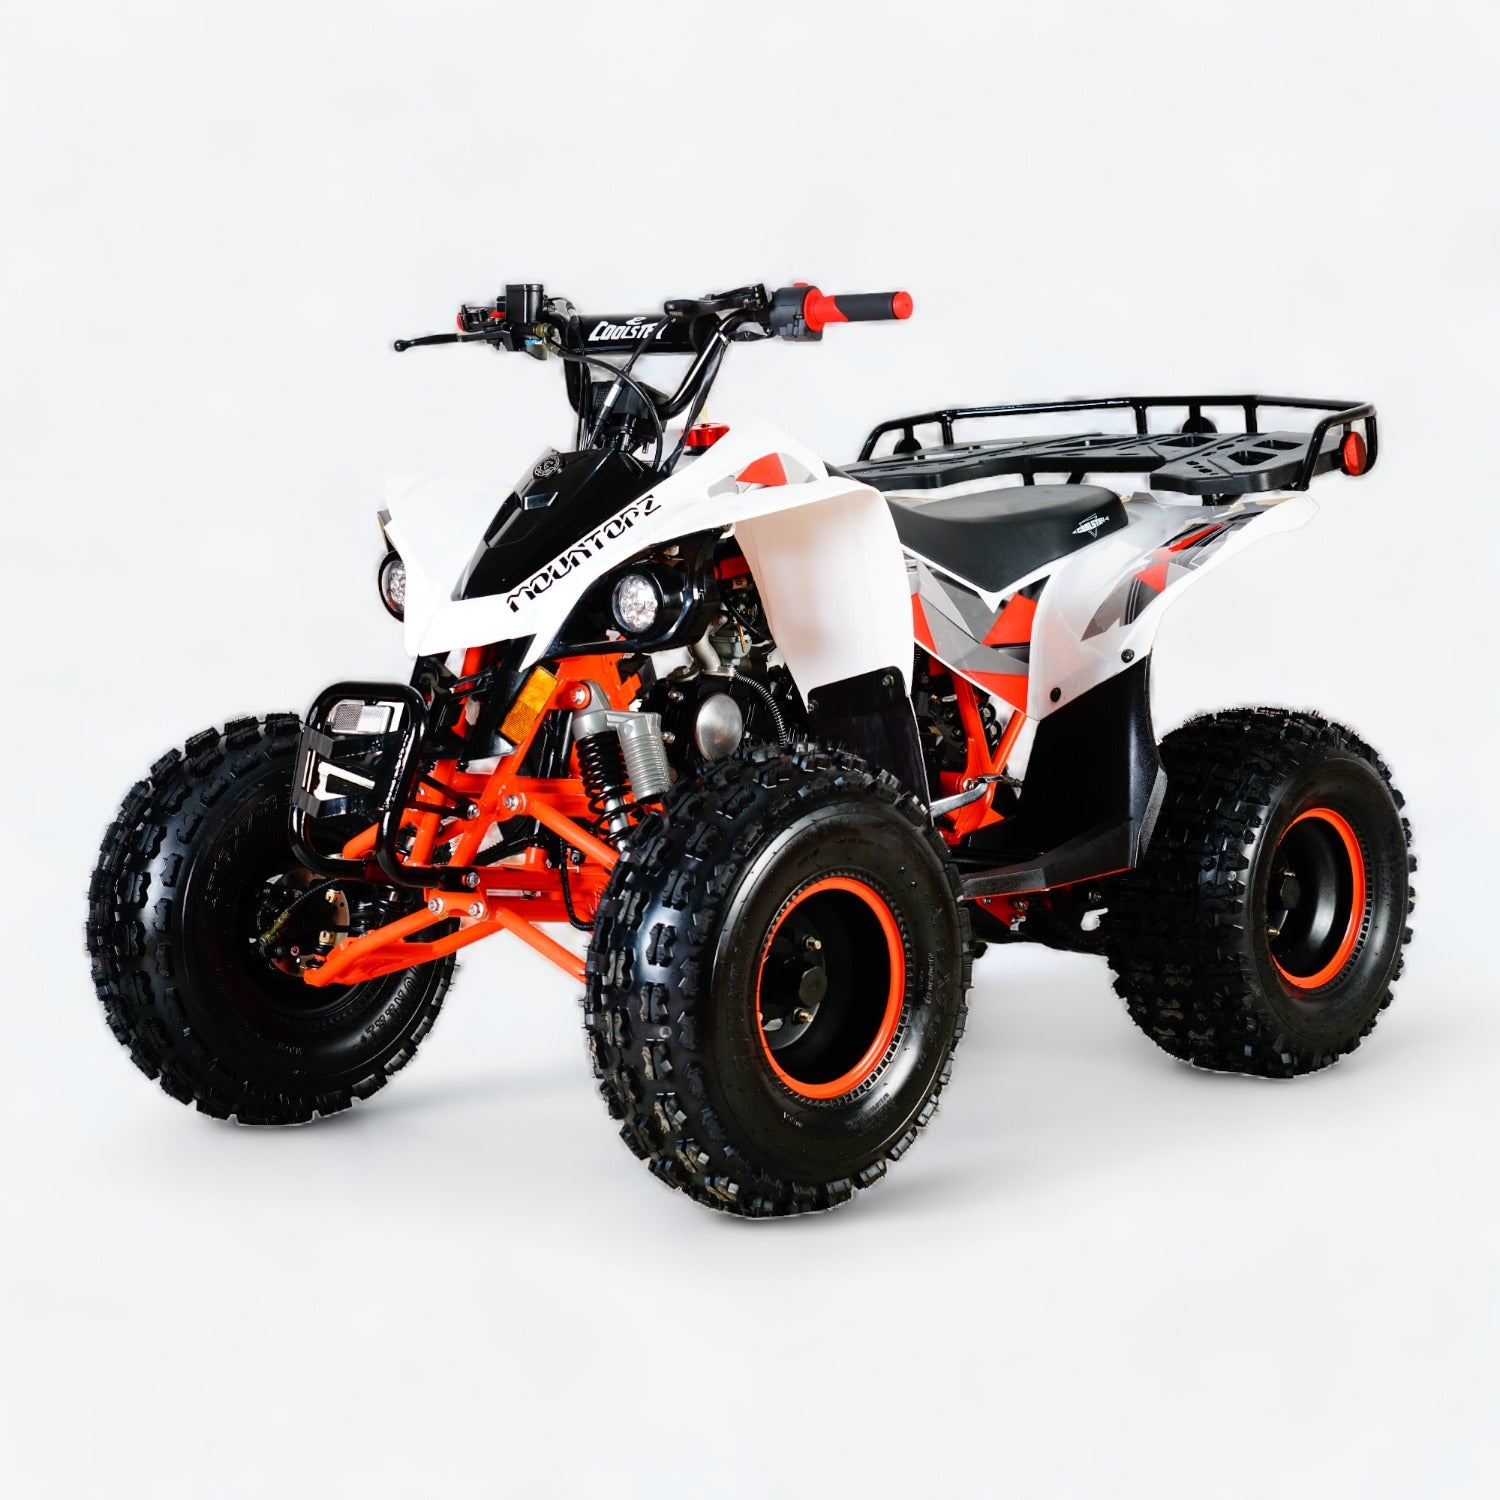 Coolster ATV-3125F2